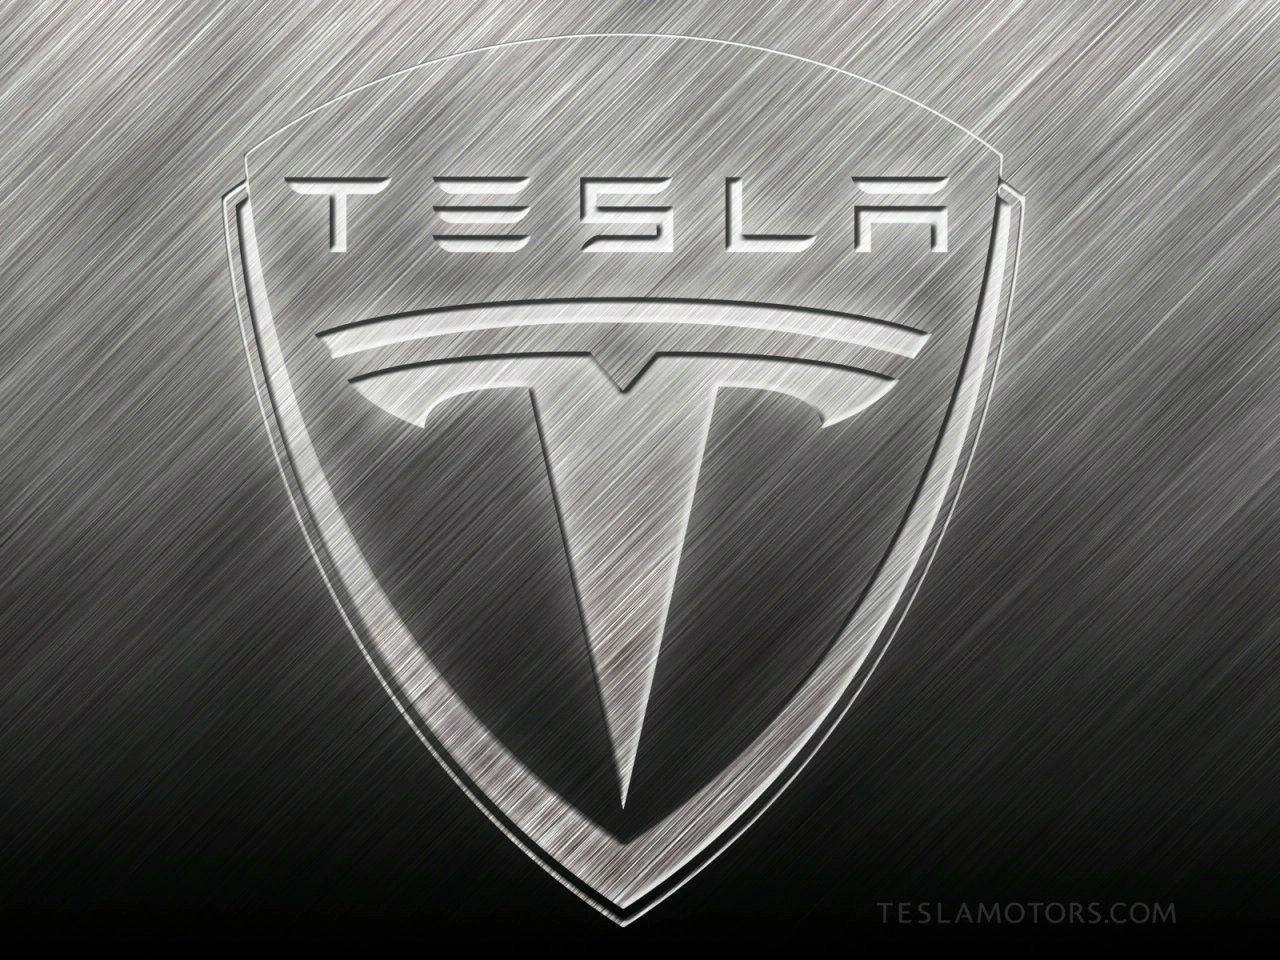 Tesla Vehicle Logo - Tesla Logo, Tesla Car Symbol Meaning and History | Car Brand Names.com